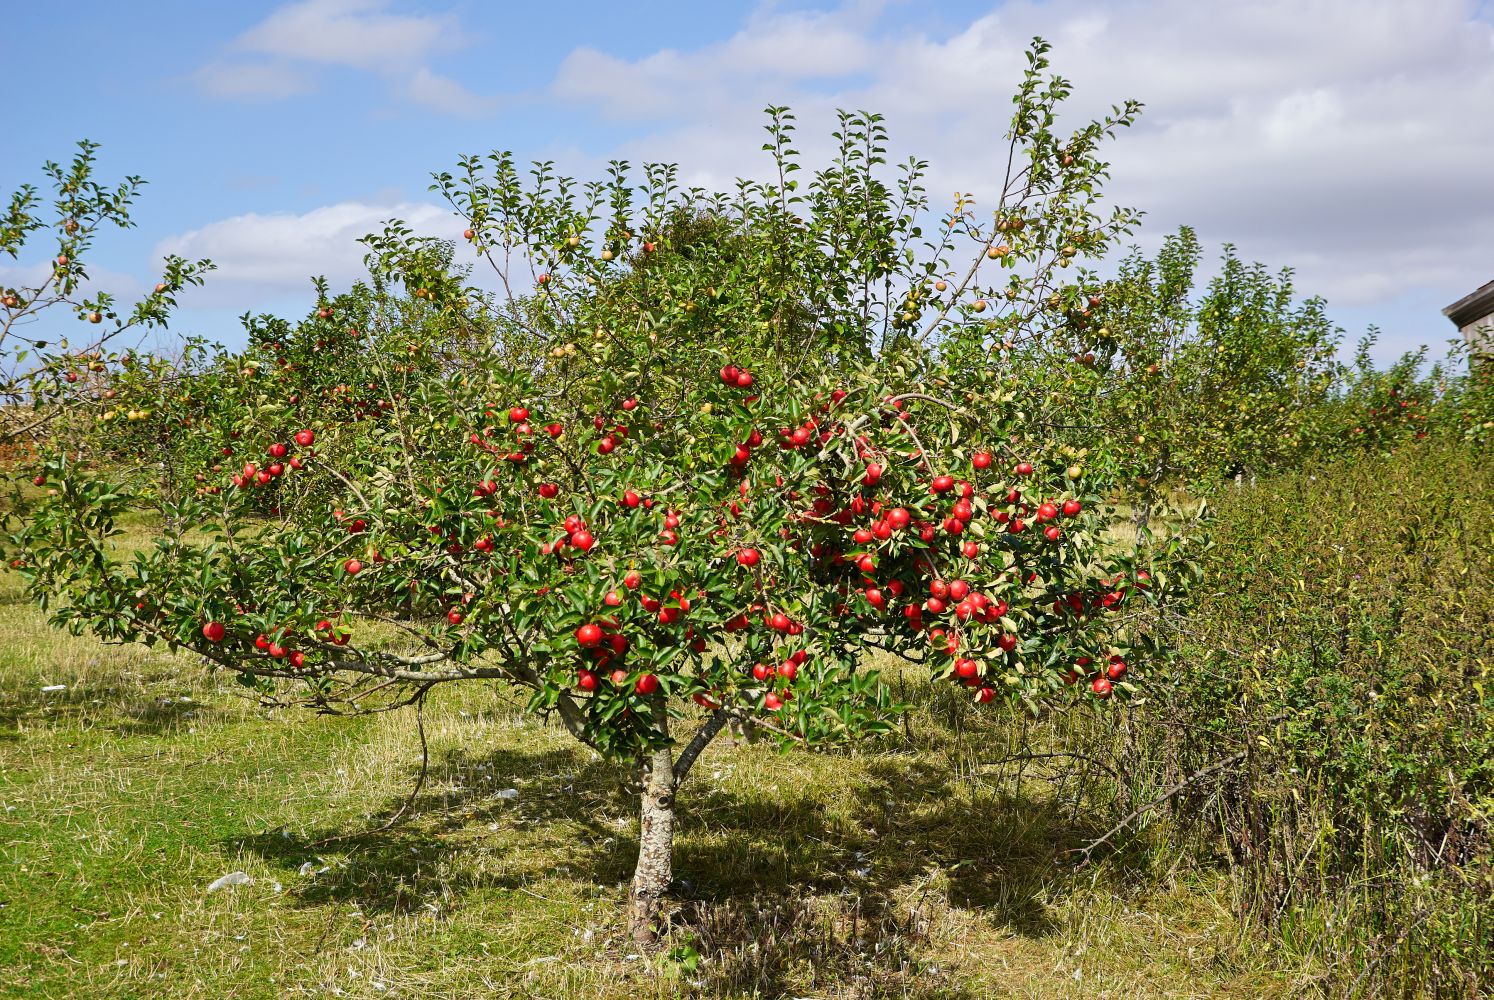 Apple tree full of apples